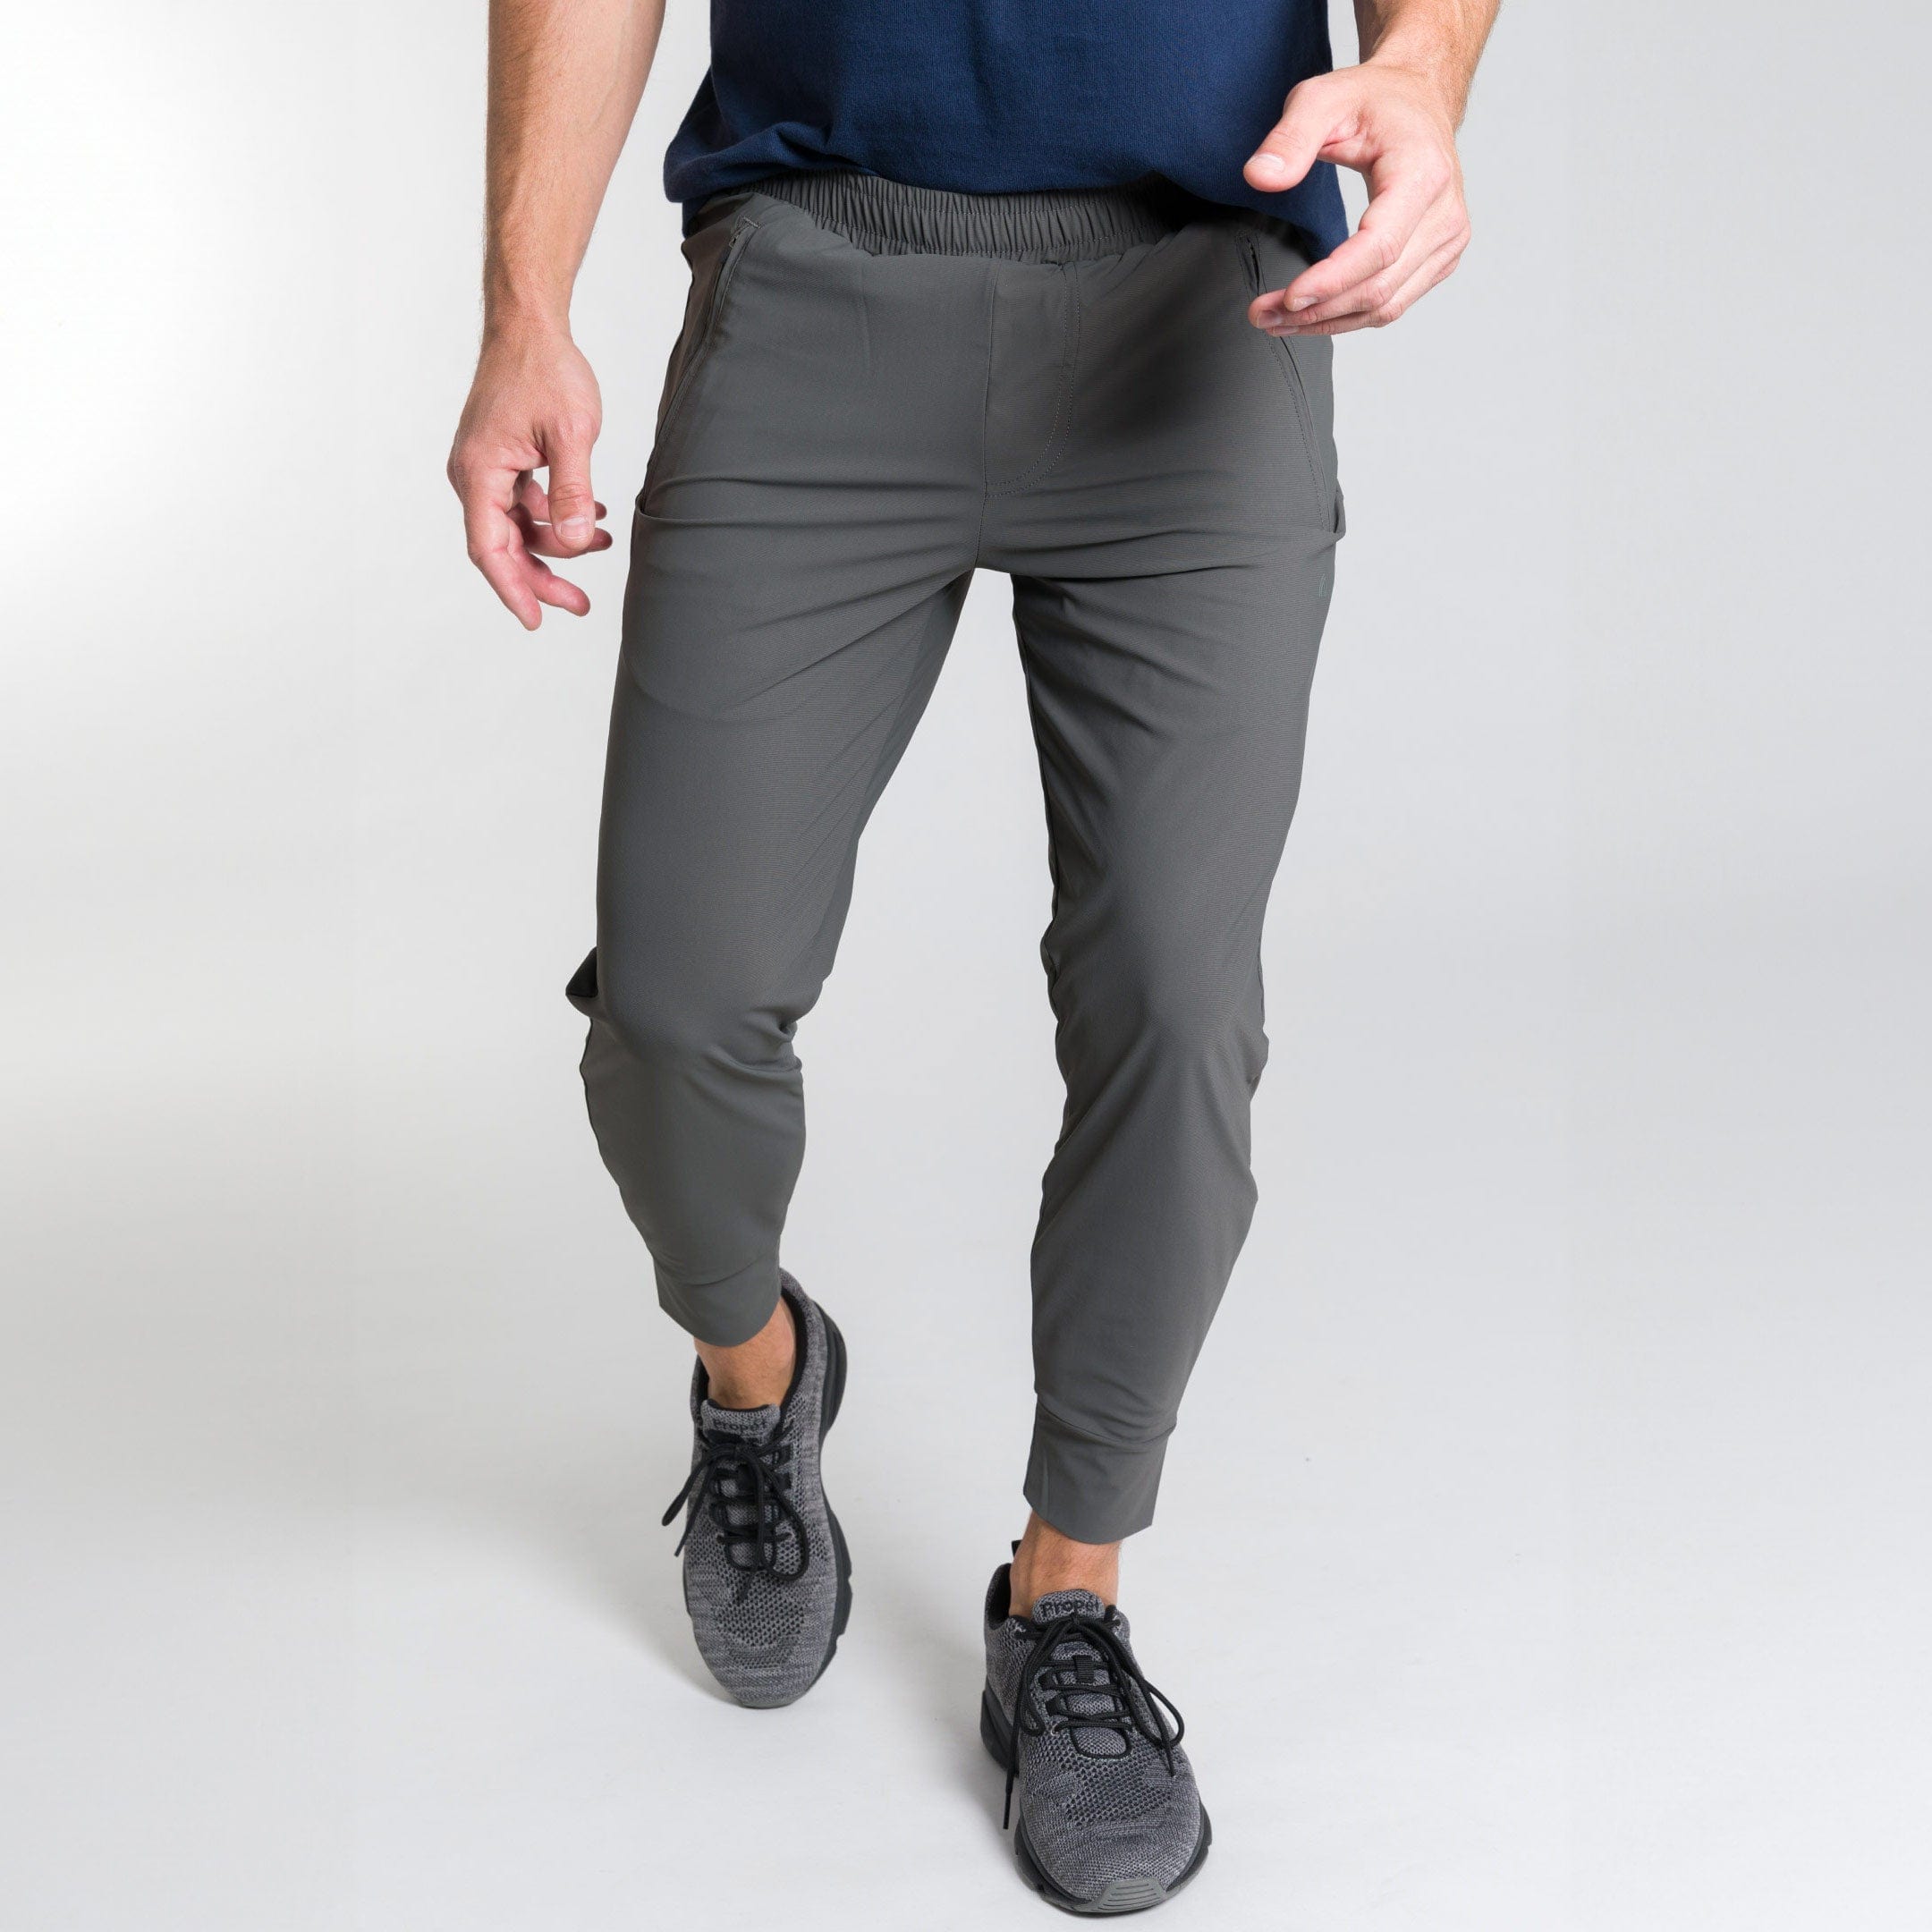 Lululemon surge jogger (shorter length), Men's Fashion, Activewear